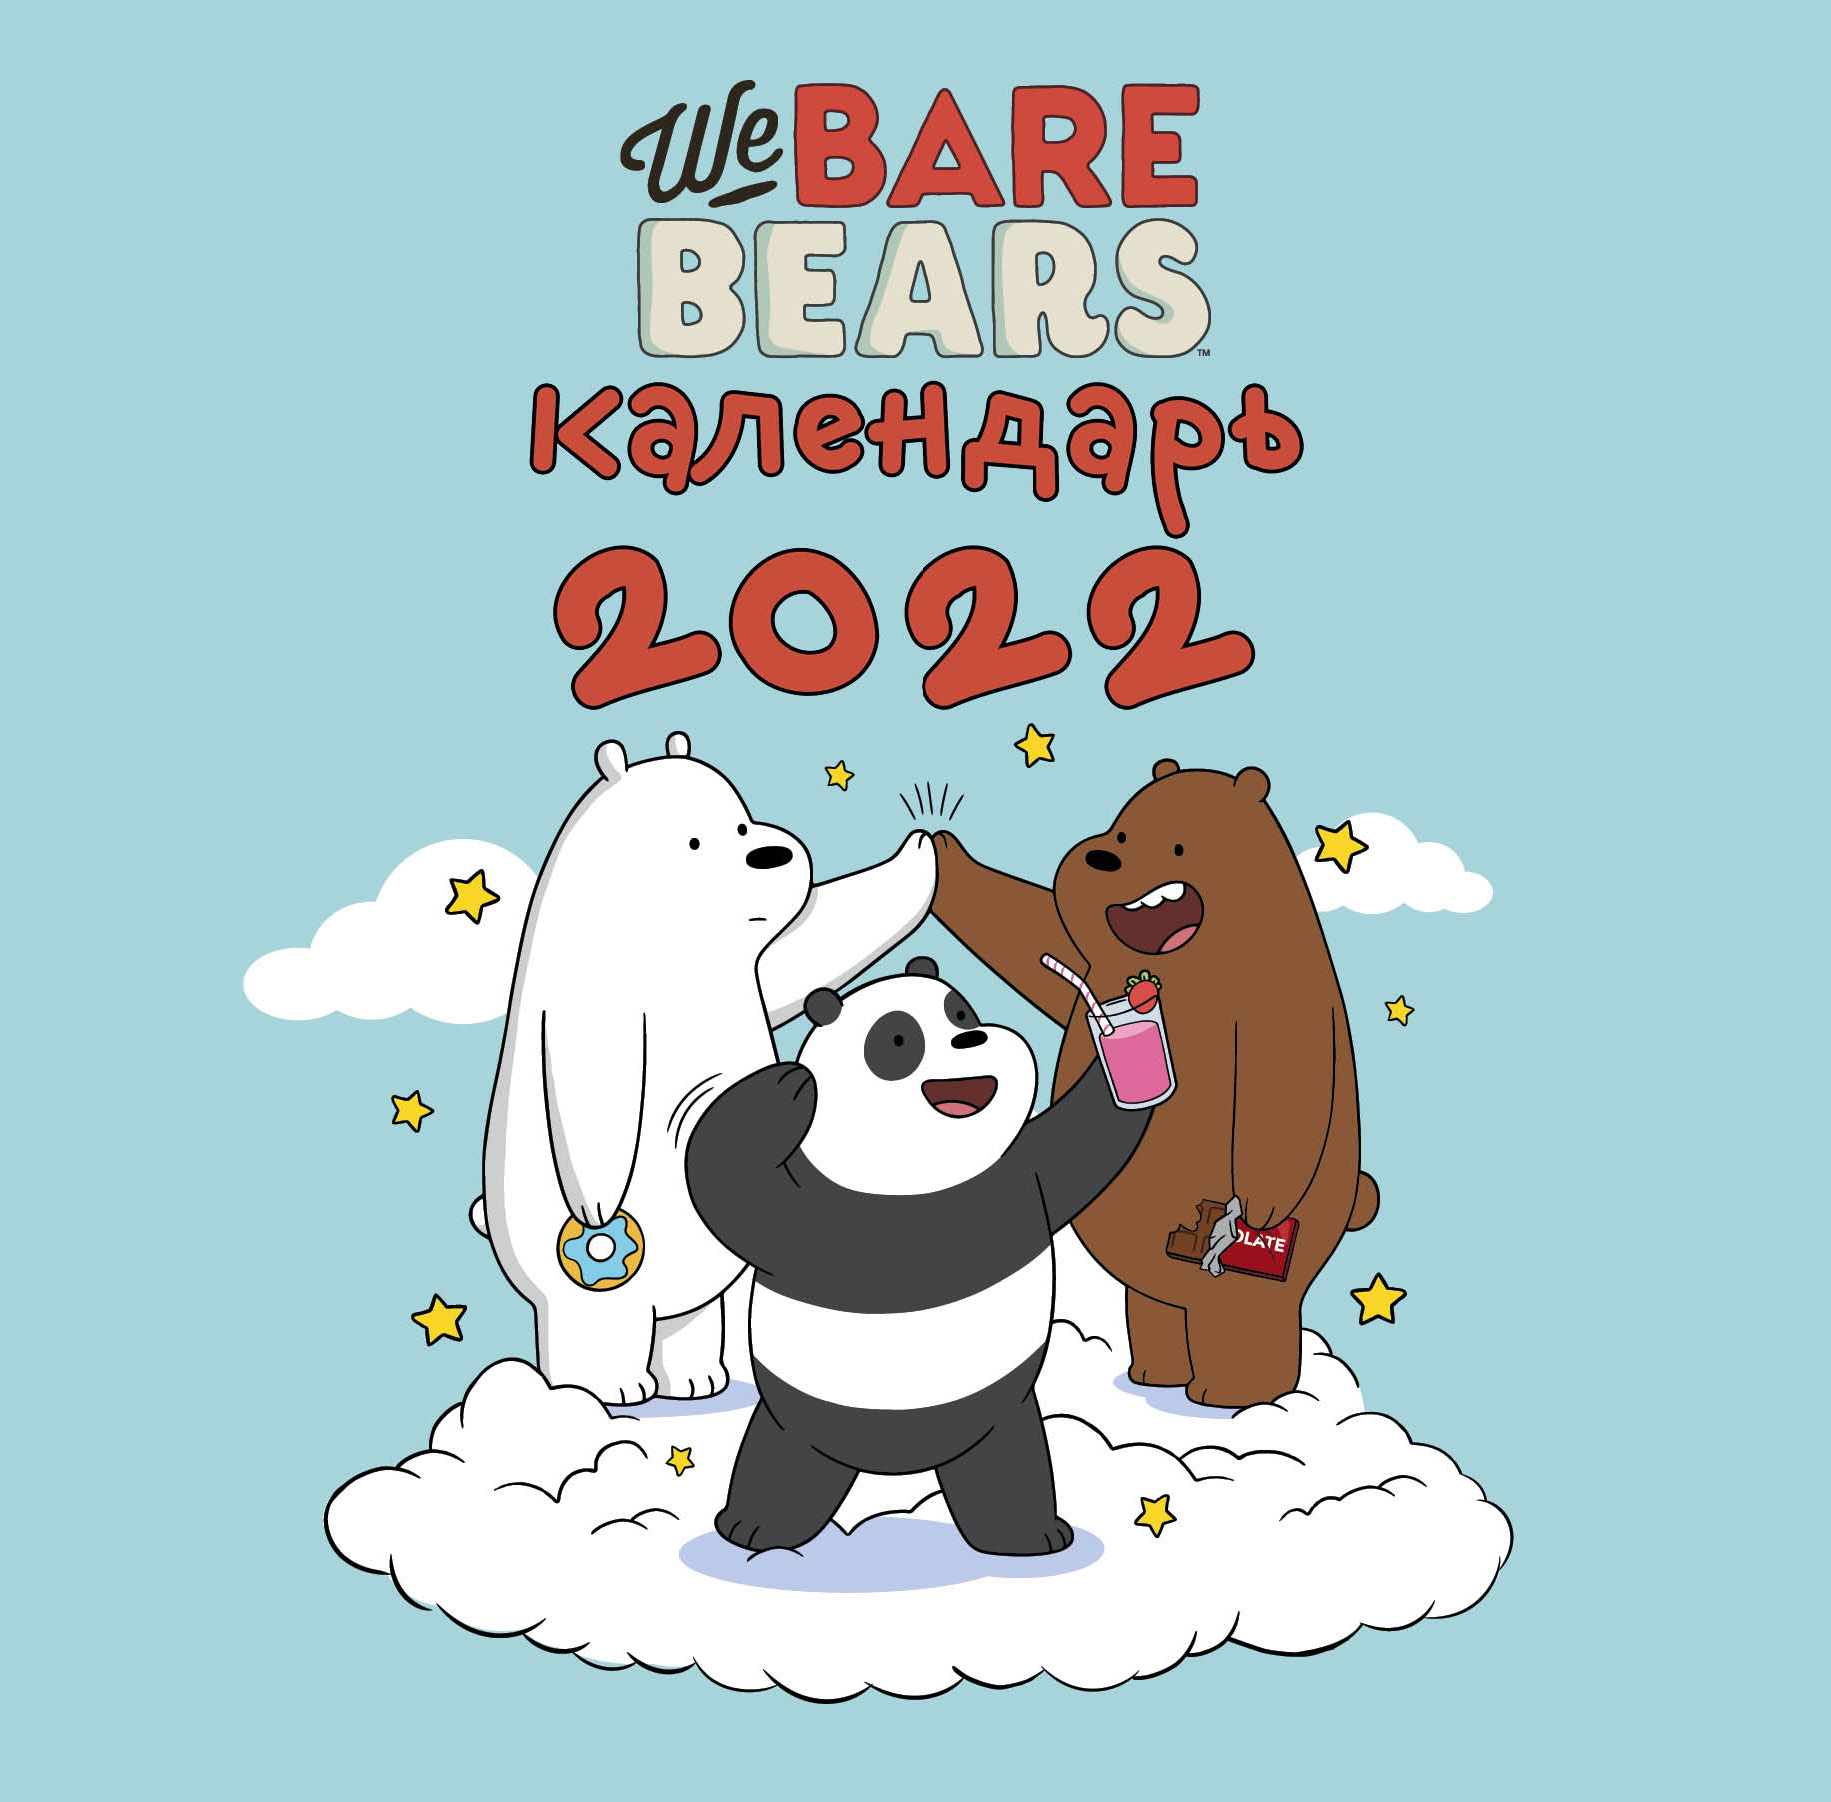 We bare bears.    2022  (300300 ) 